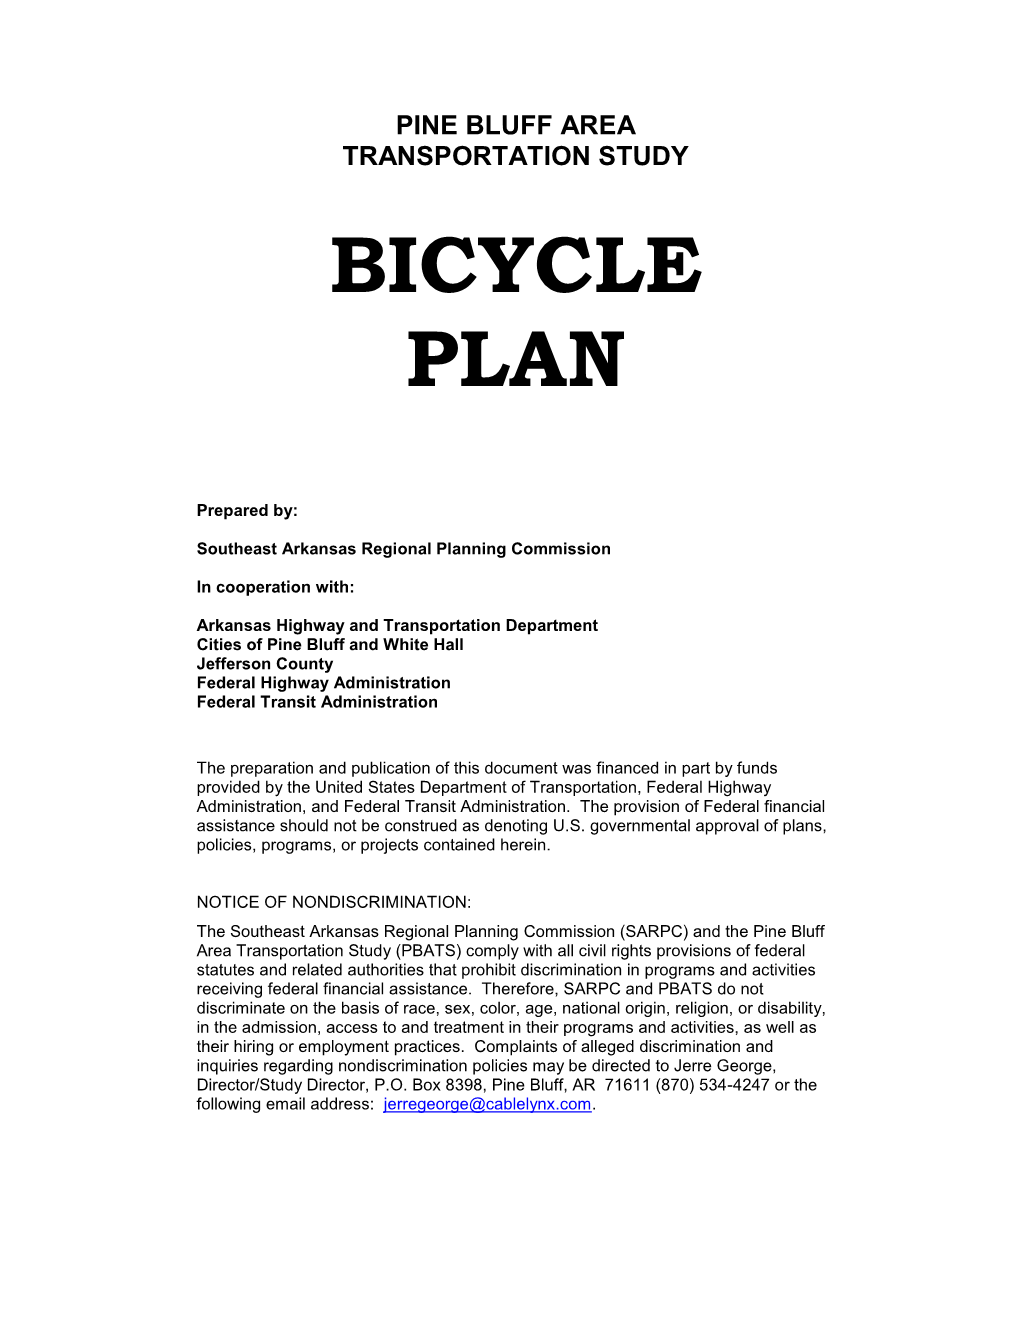 Pine Bluff Bike and Pedestrian Plan